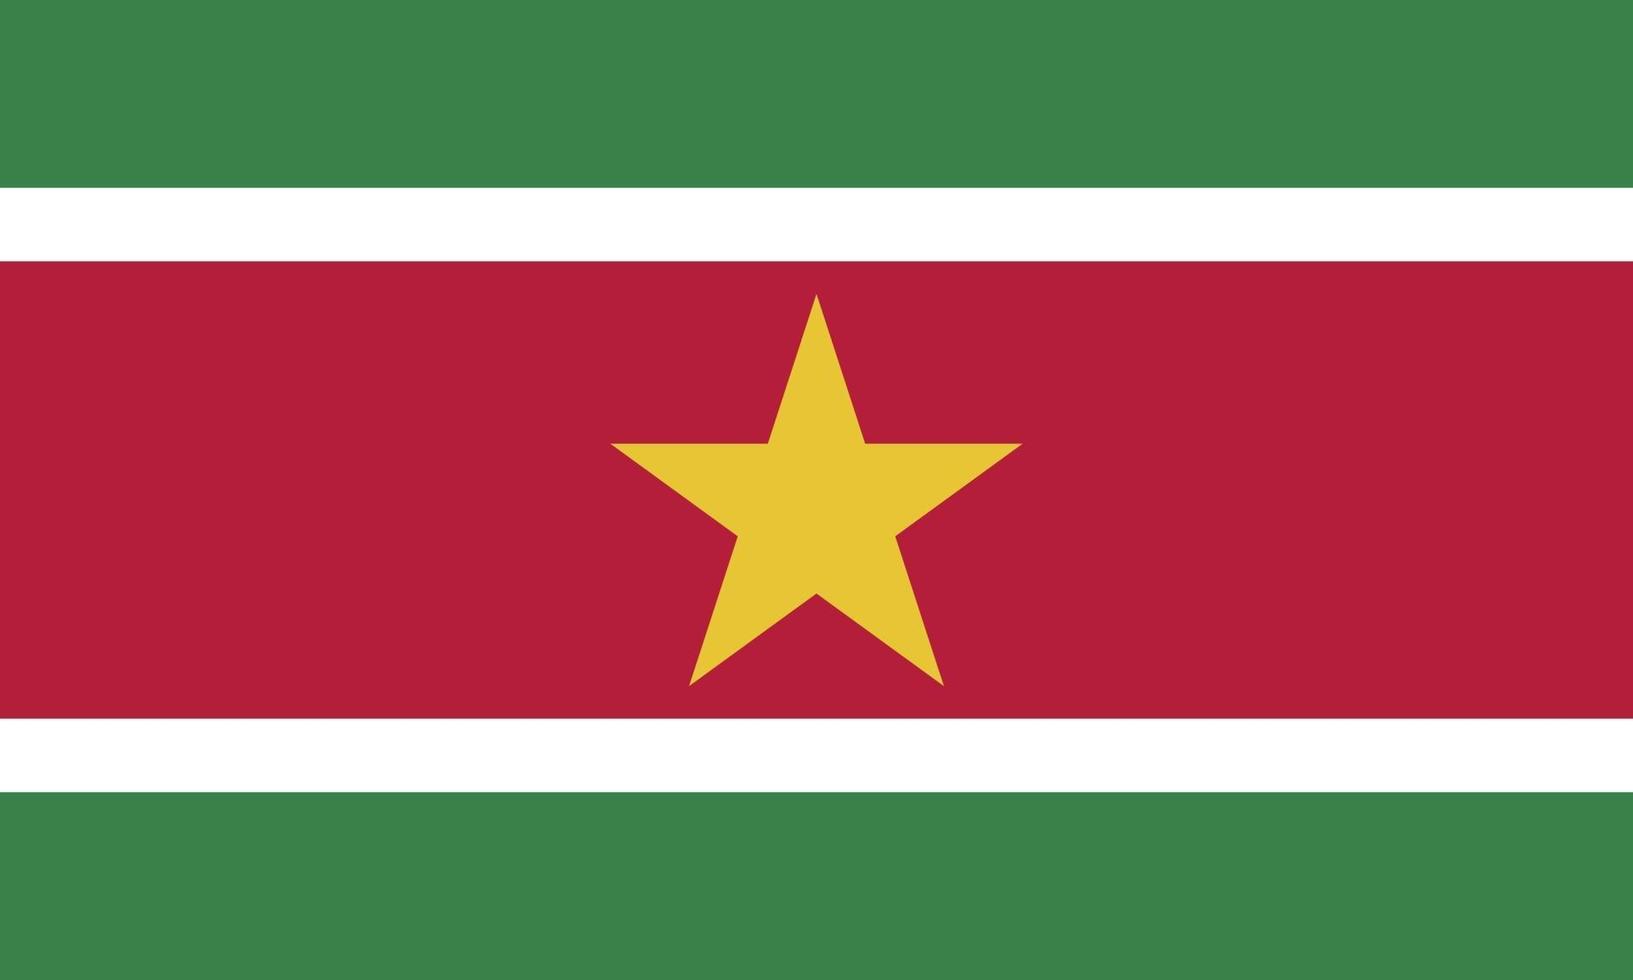 vector illustration of Suriname flag